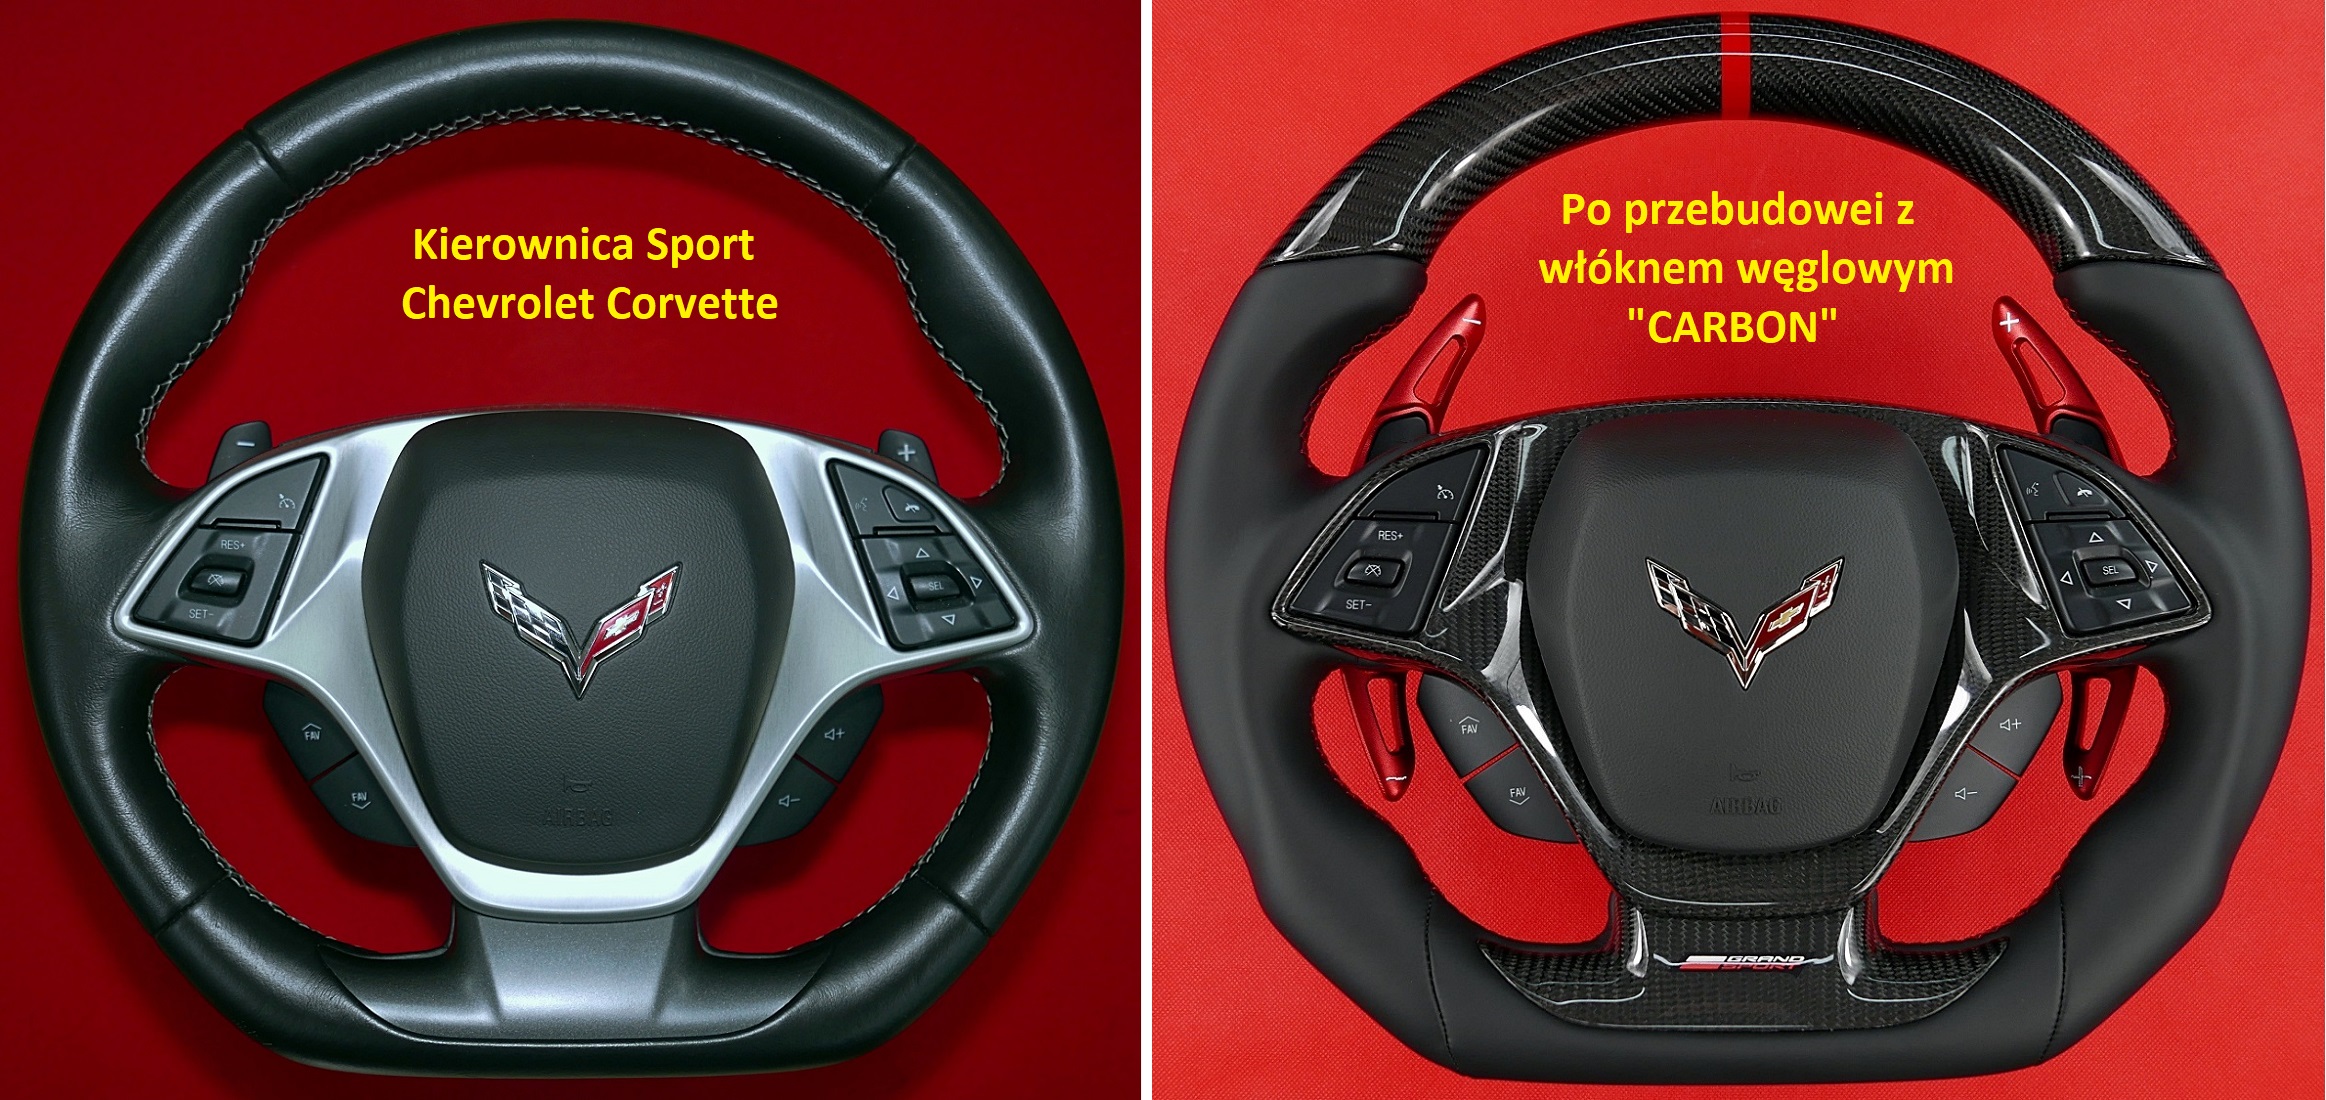 Kierownica Chevrolet Corvette carbon fiber customs steering wheel kierownica z włókna węglowego carbon